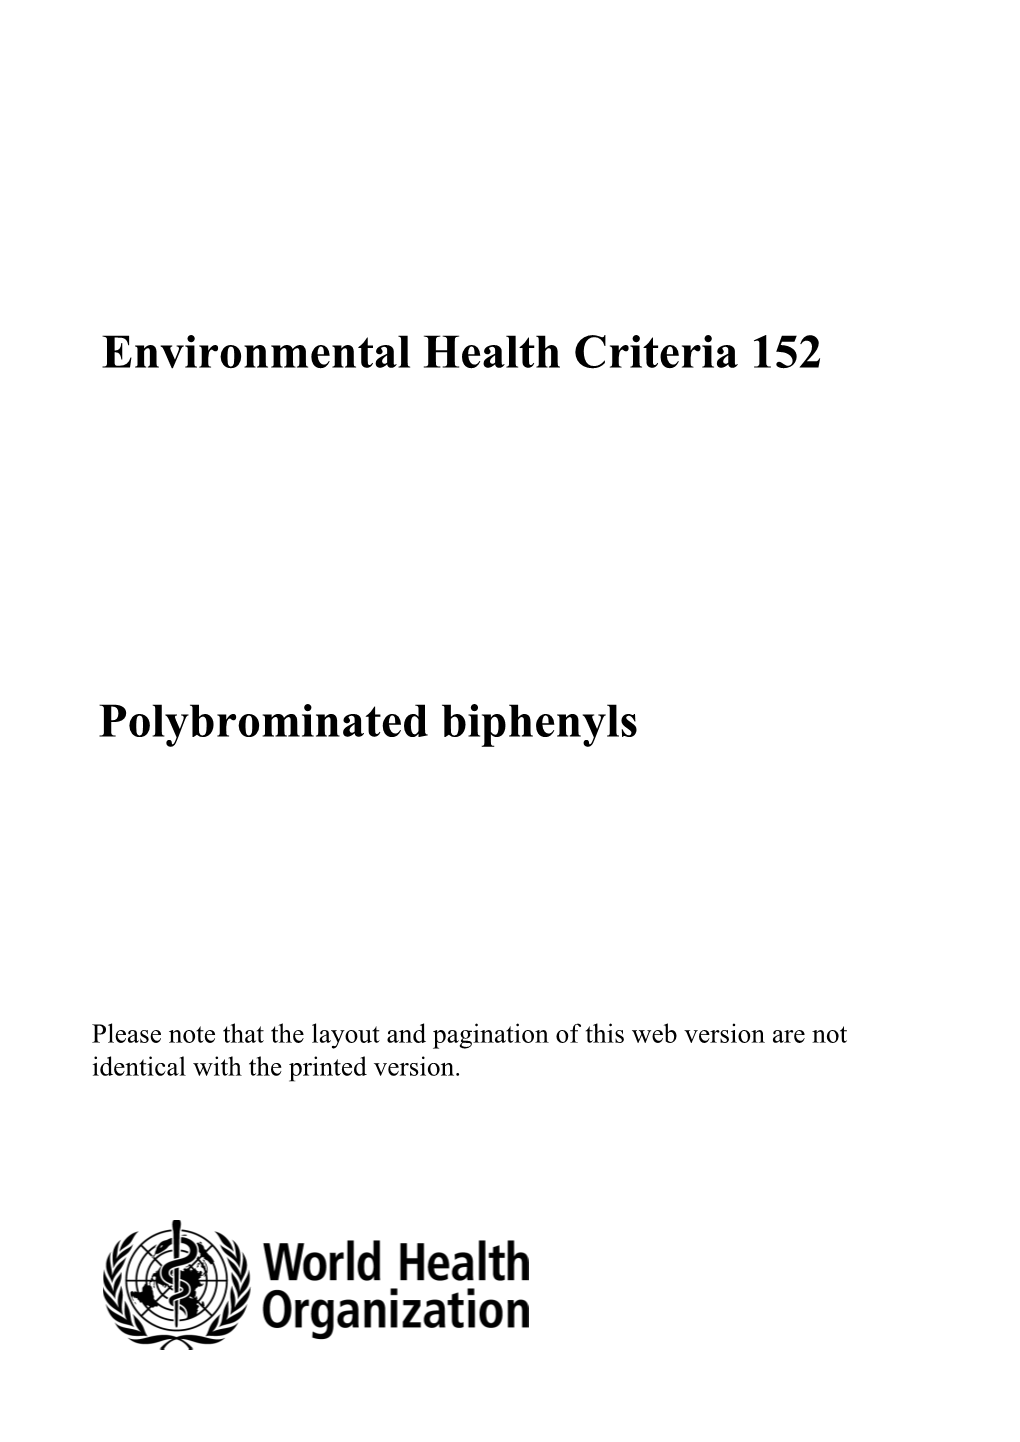 Environmental Health Criteria 152 Polybrominated Biphenyls